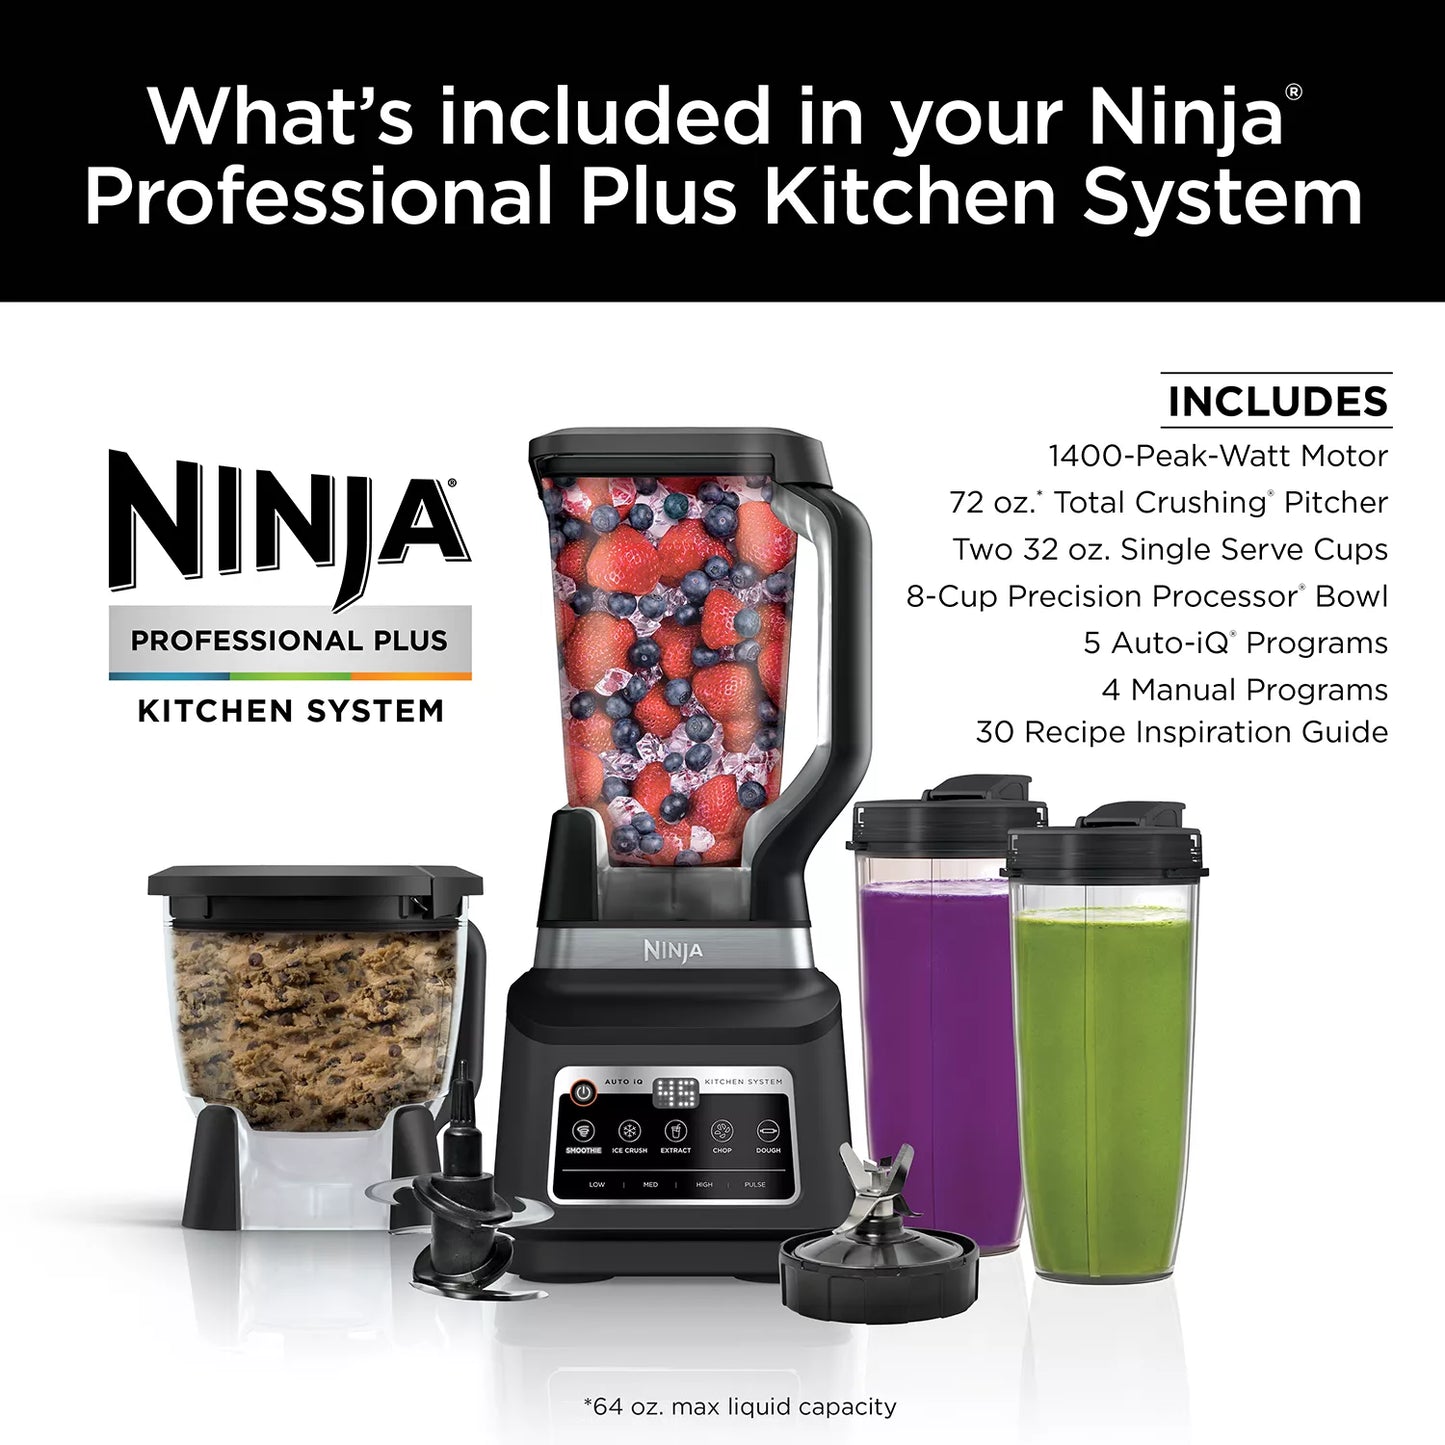 Ninja Professional Plus Kitchen System with Auto-iQ